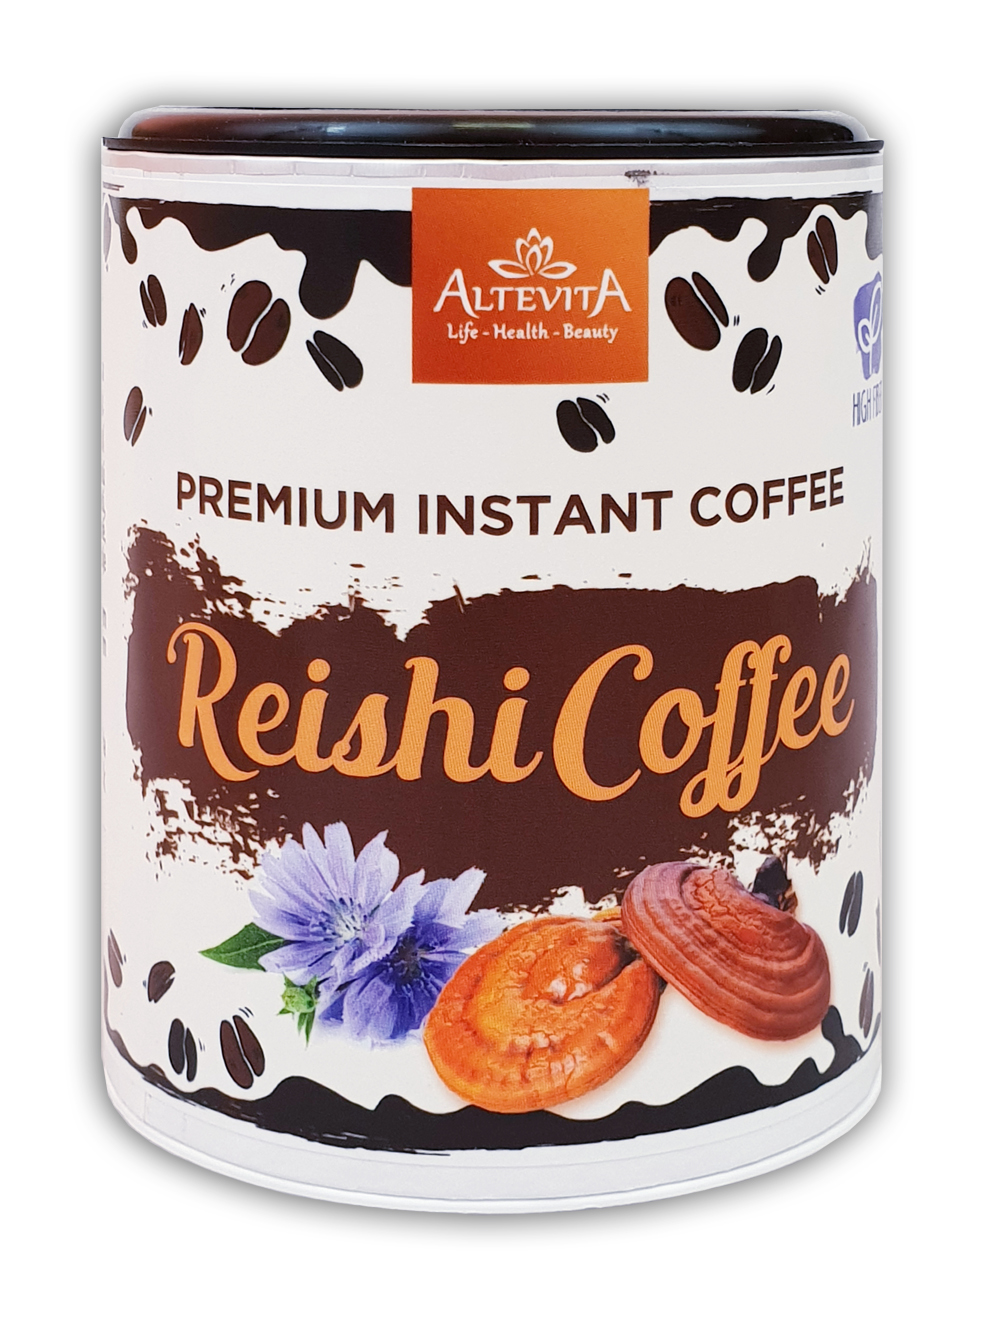 Altevita Káva s Reishi (Reishi coffee) 100 g